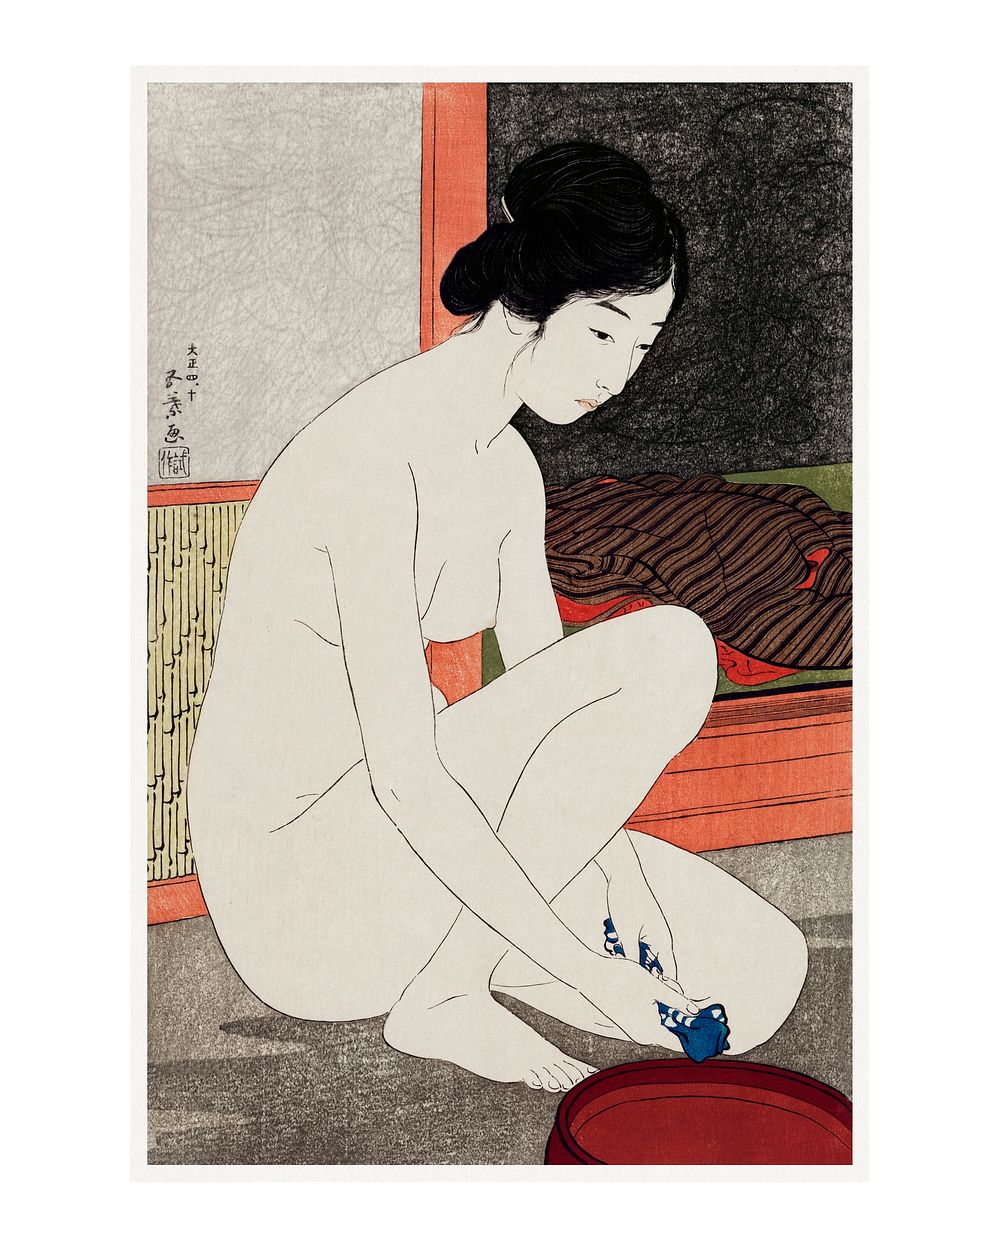 Goyō Hashiguchi art print, Yokugo no onna painting (1915). Original from Library of Congress. Digitally enhanced by rawpixel.